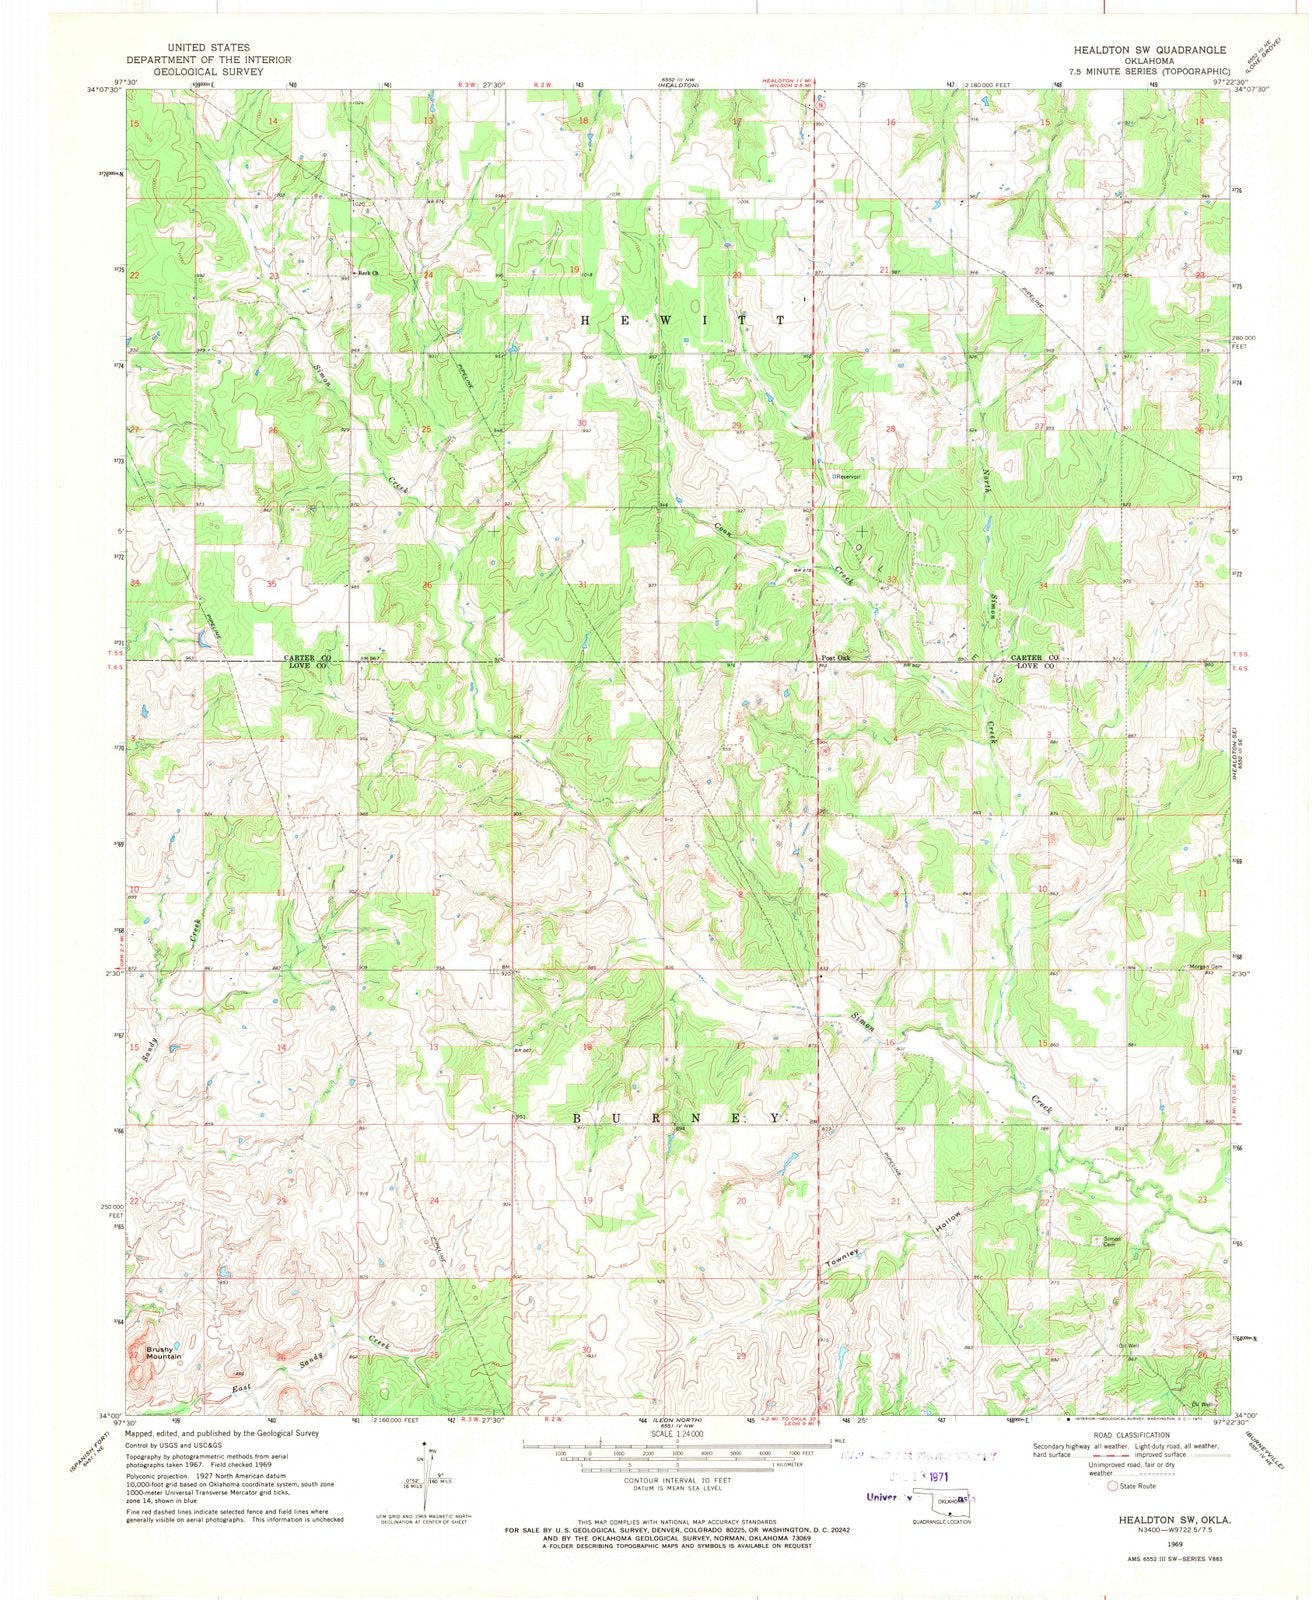 1969 Healdton, OK - Oklahoma - USGS Topographic Map v2